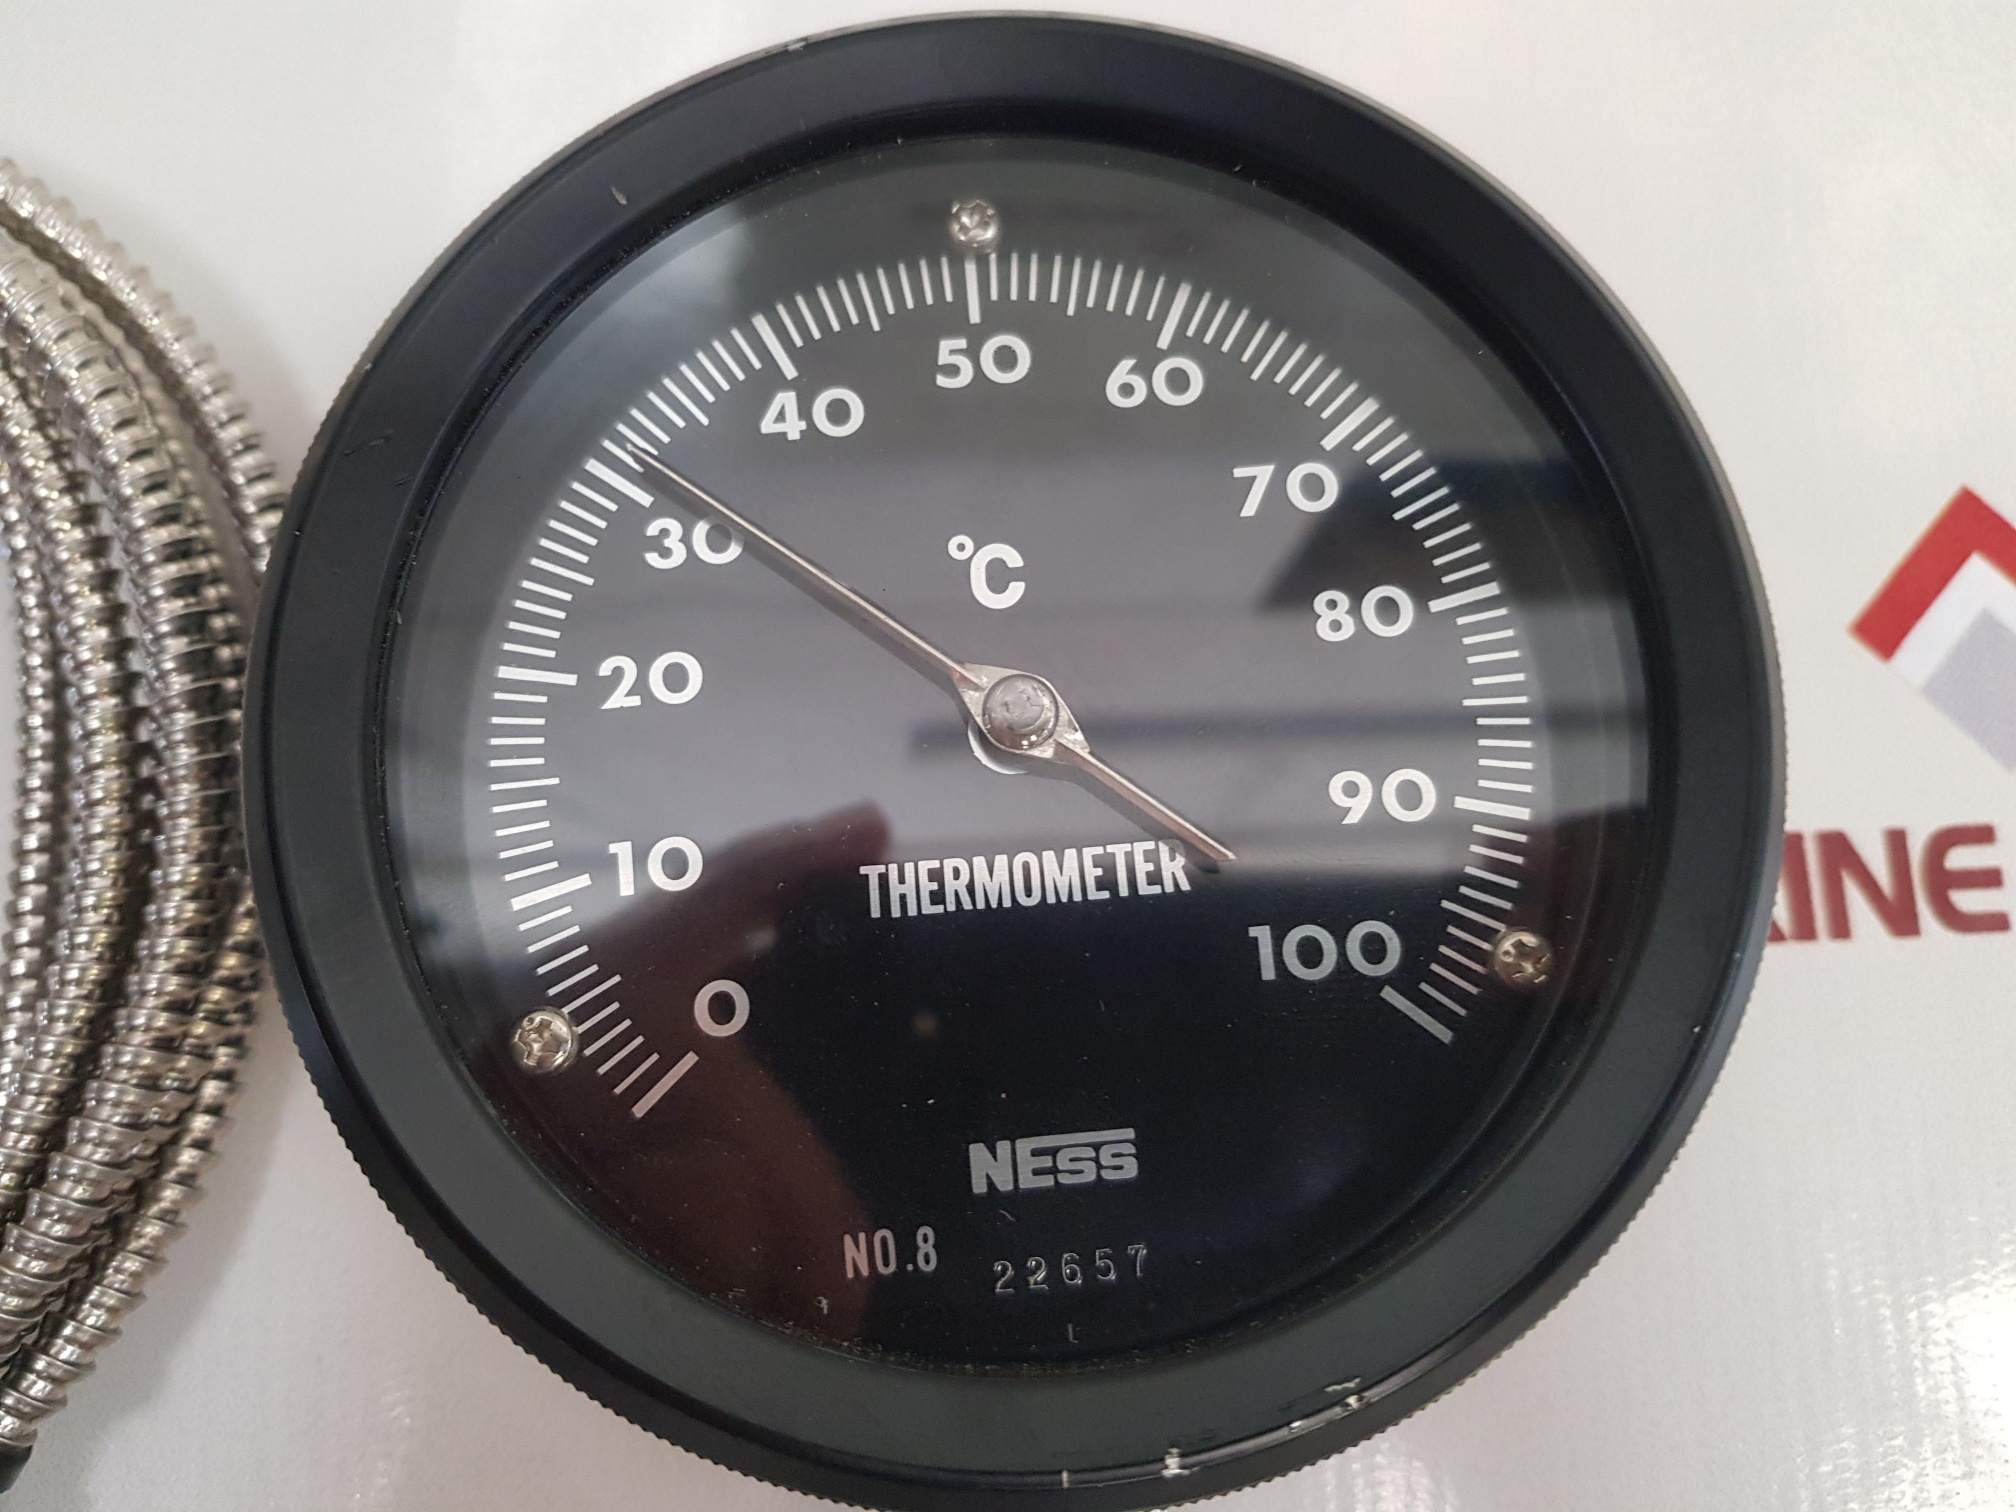 NESSTECH/MITSUBISHI TUS-2S-M-S THERMOMETER 0 TO 100°C